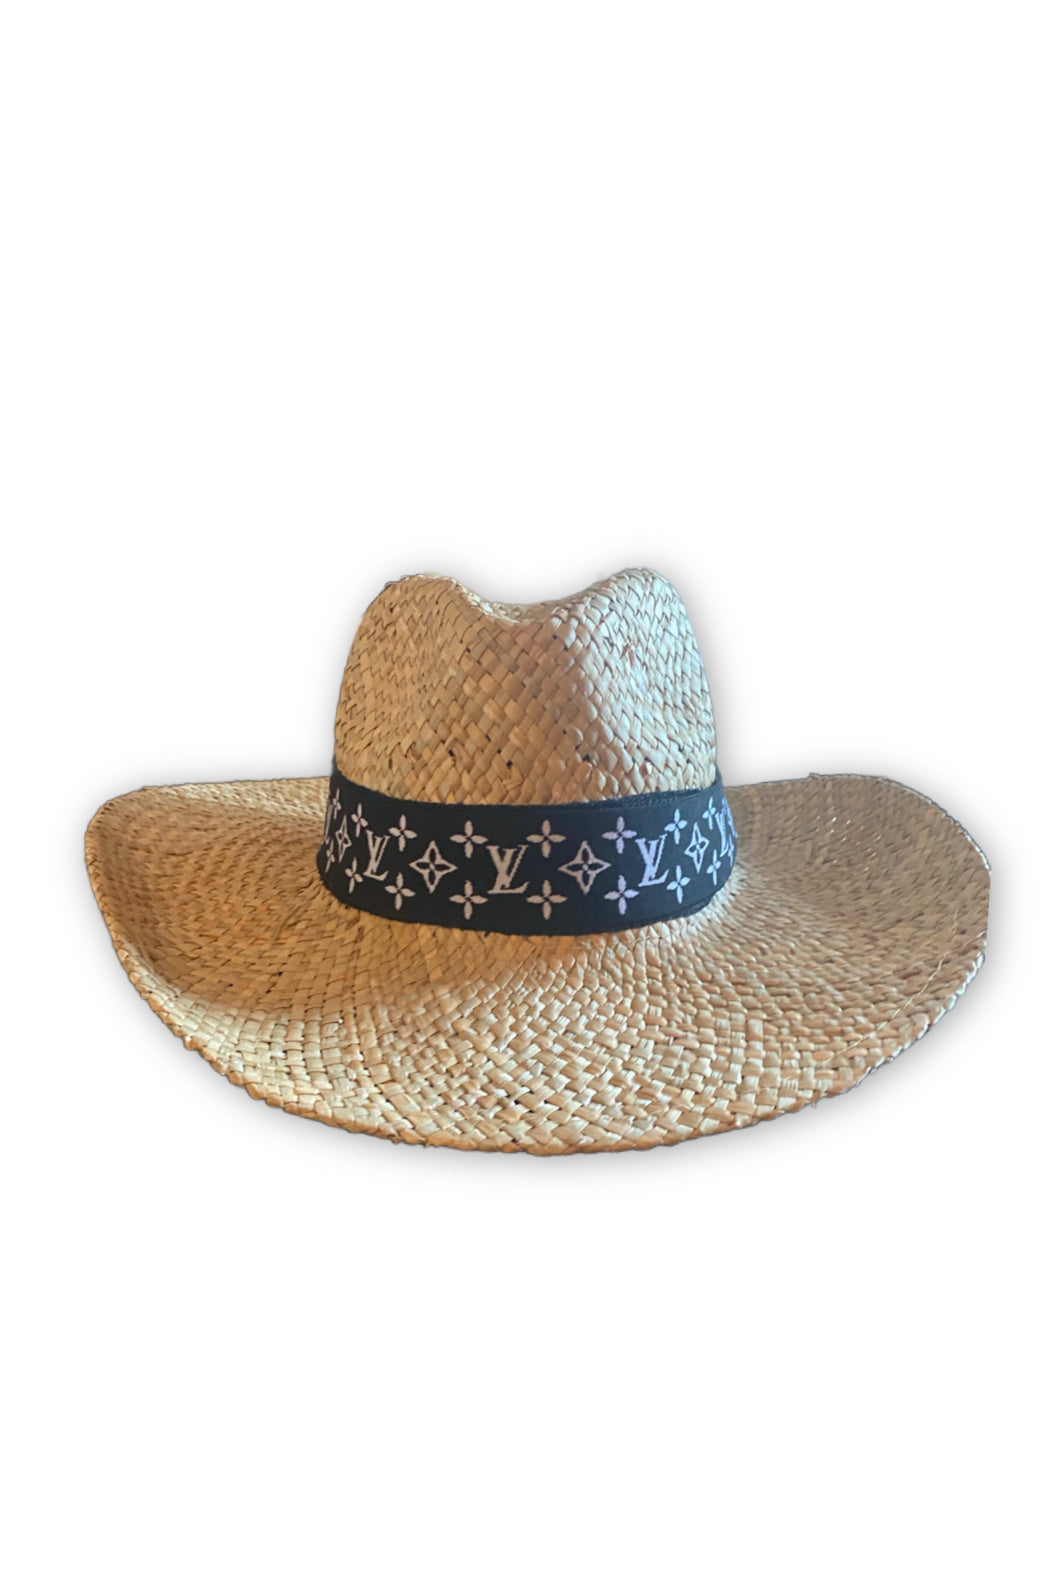 LV Banded Upcycled Straw Panama Hat